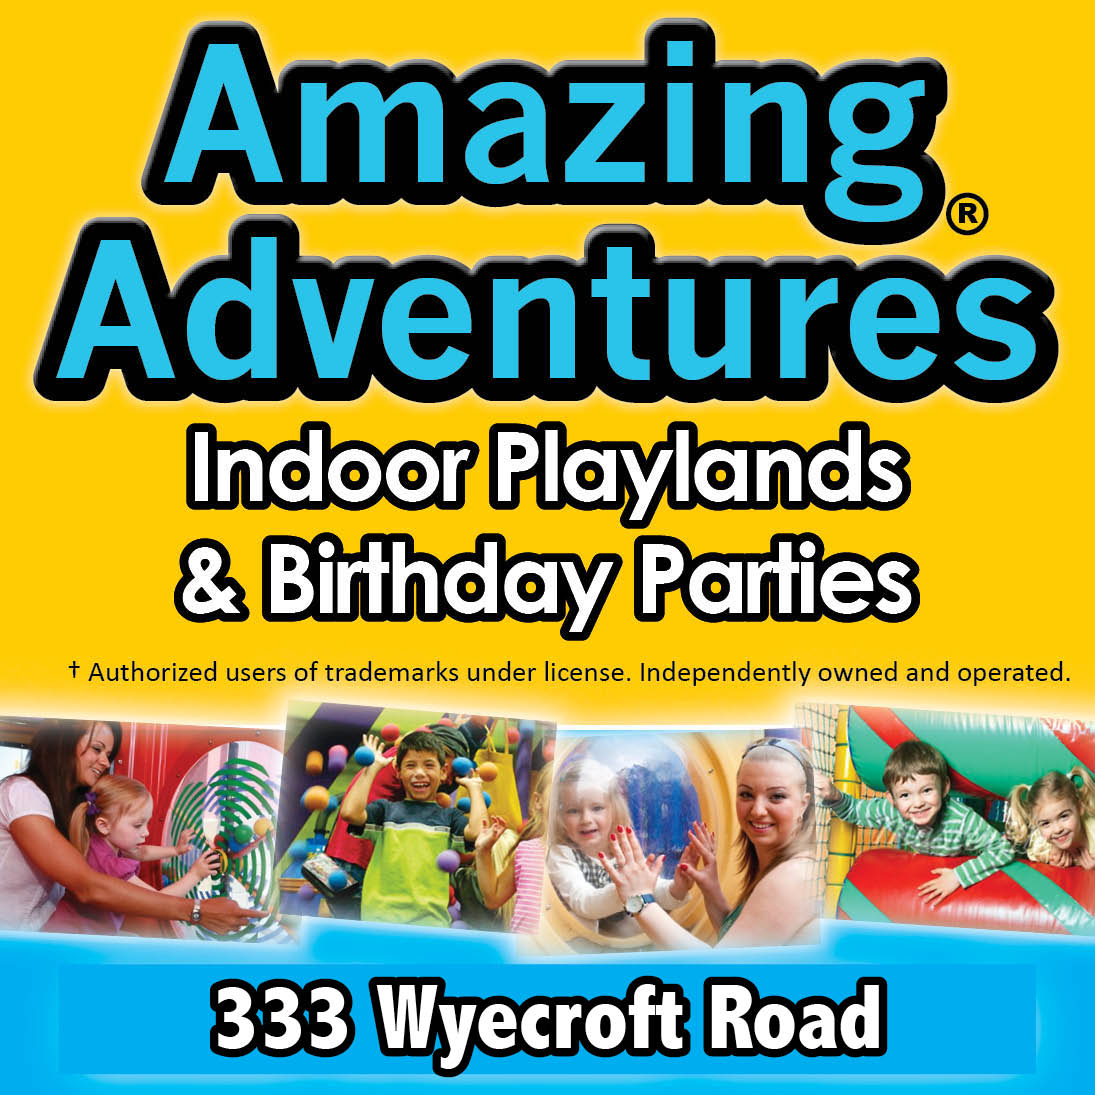 Amazing Adventures Playland Indoor Playground